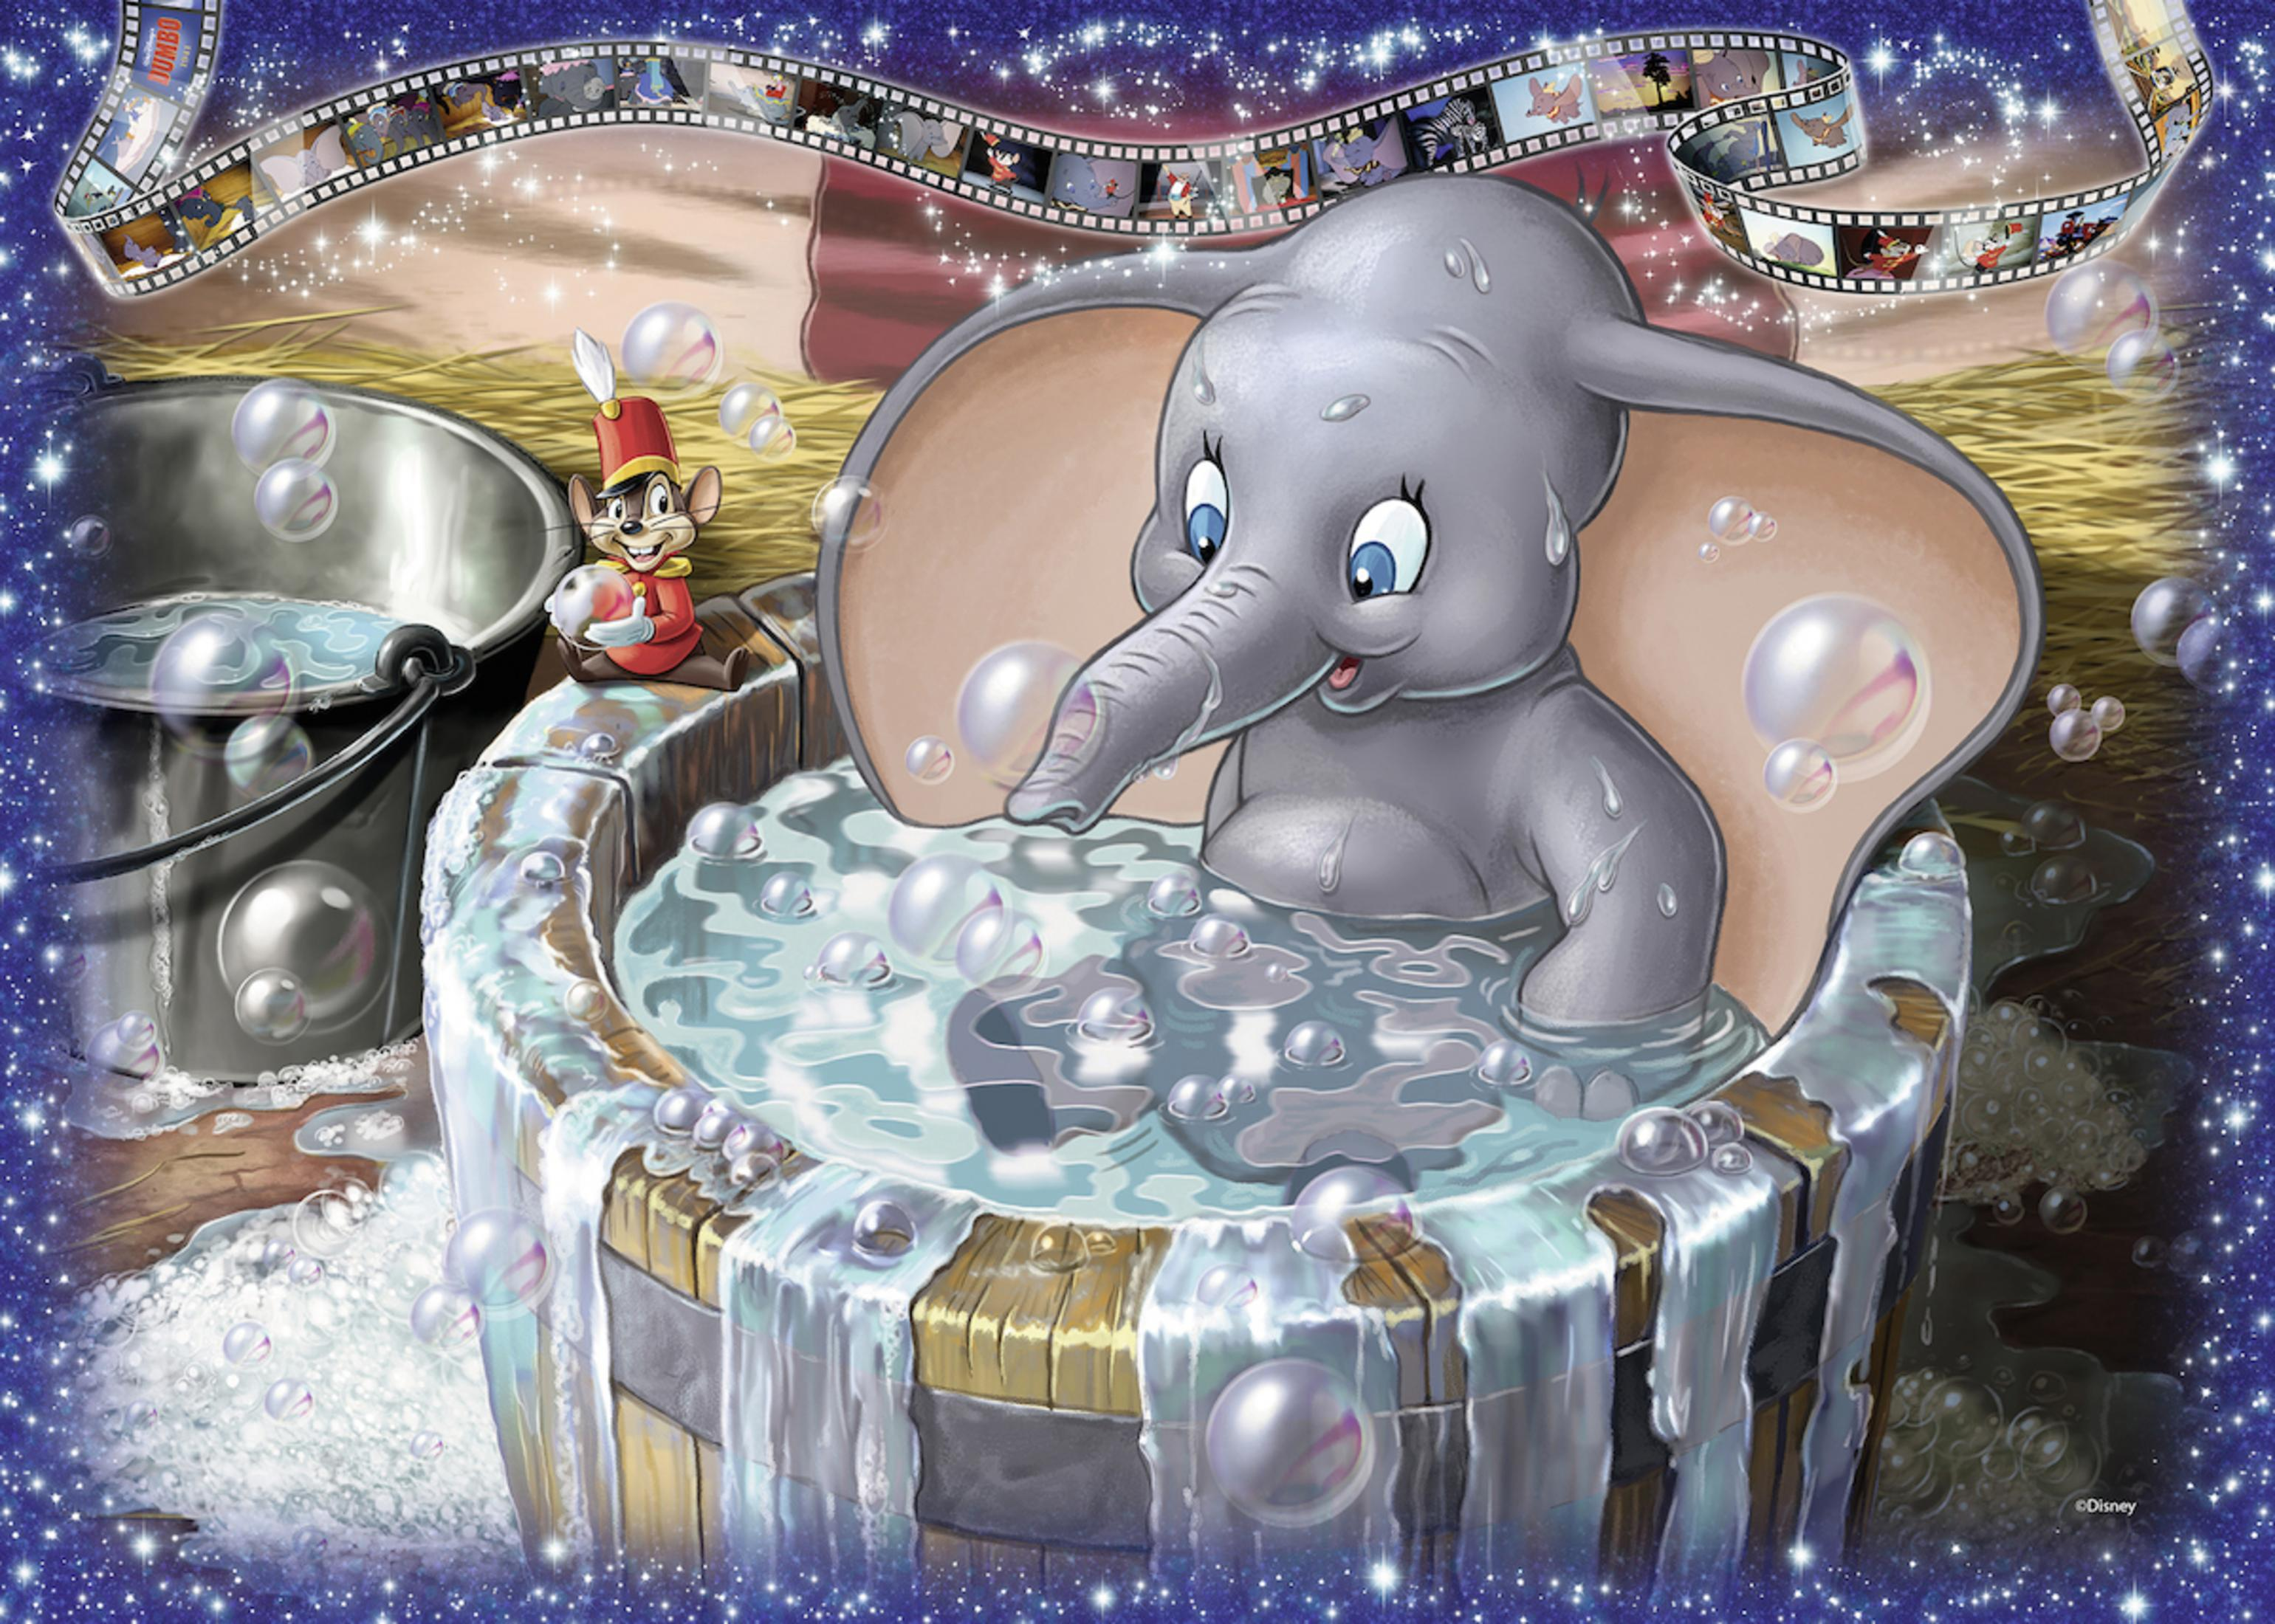 RAVENSBURGER Disney Dumbo Teile 1000 Puzzle - Puzzle